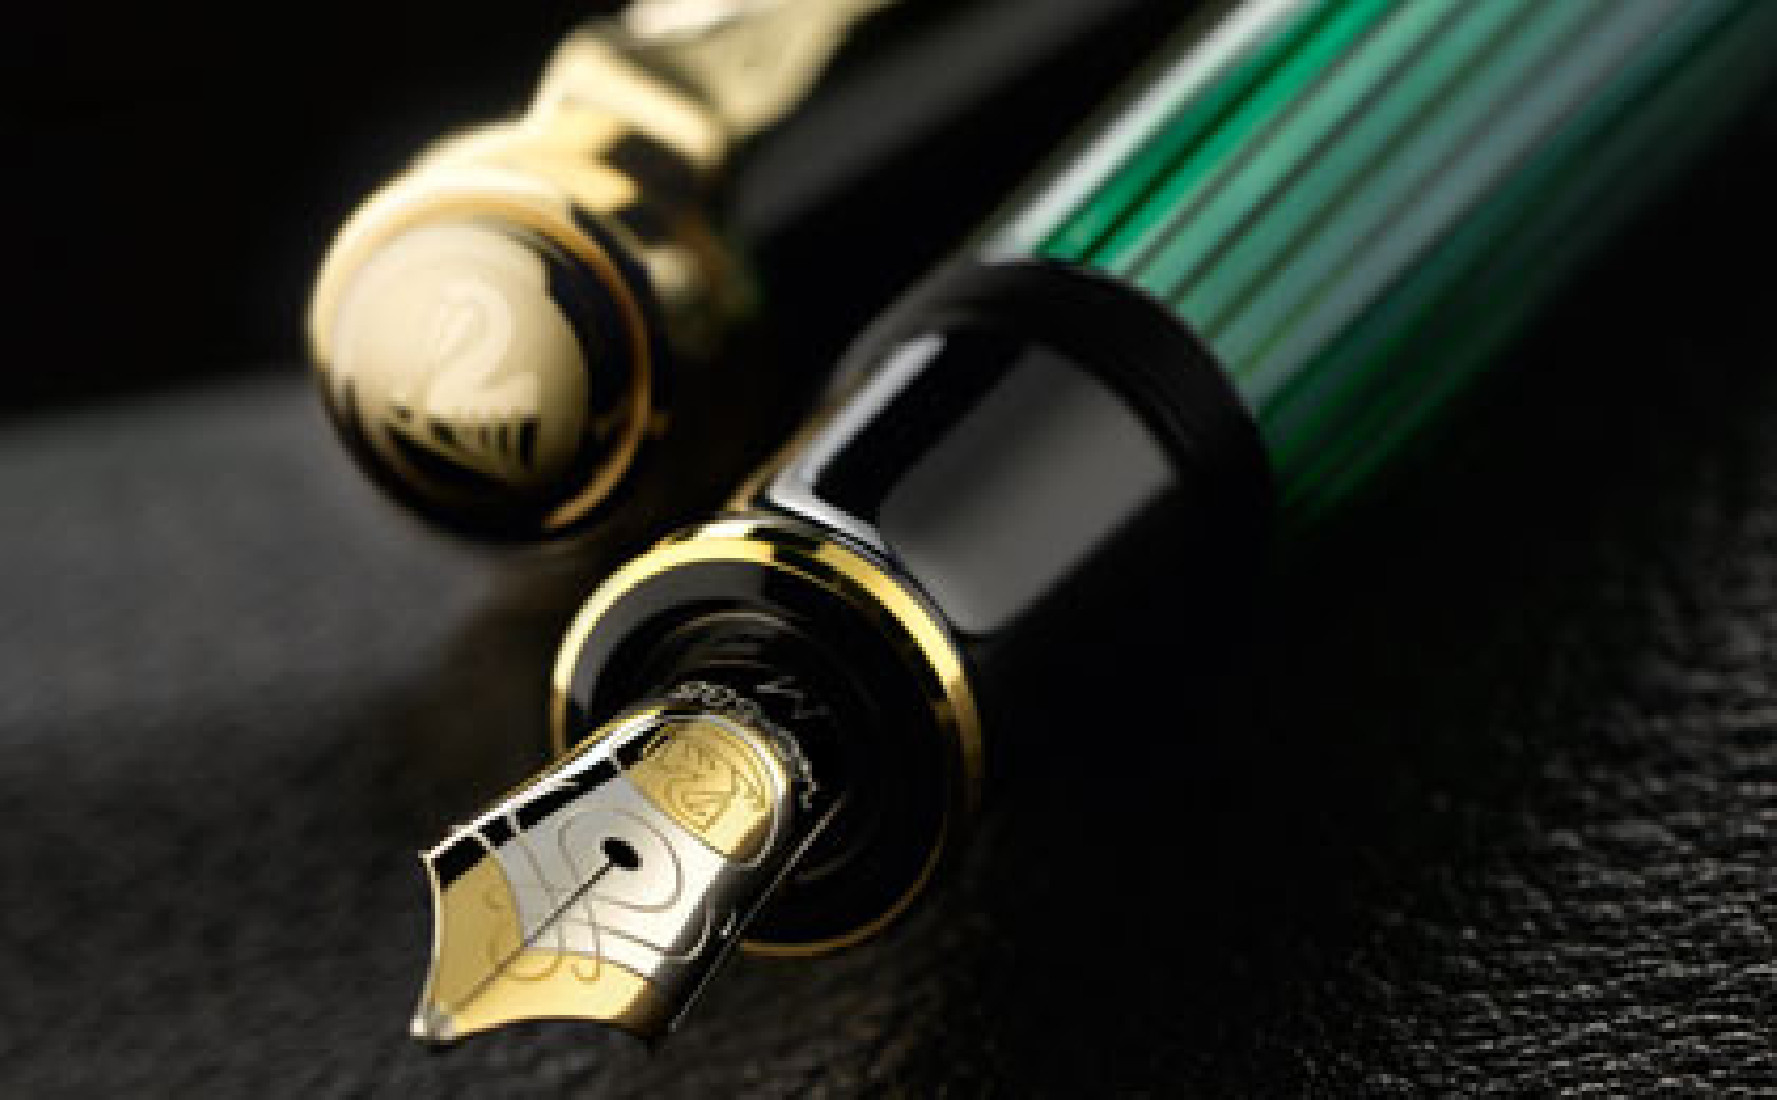 Pelikan Souveran M400 Black Green  Fountain Pen Extra Fine nib